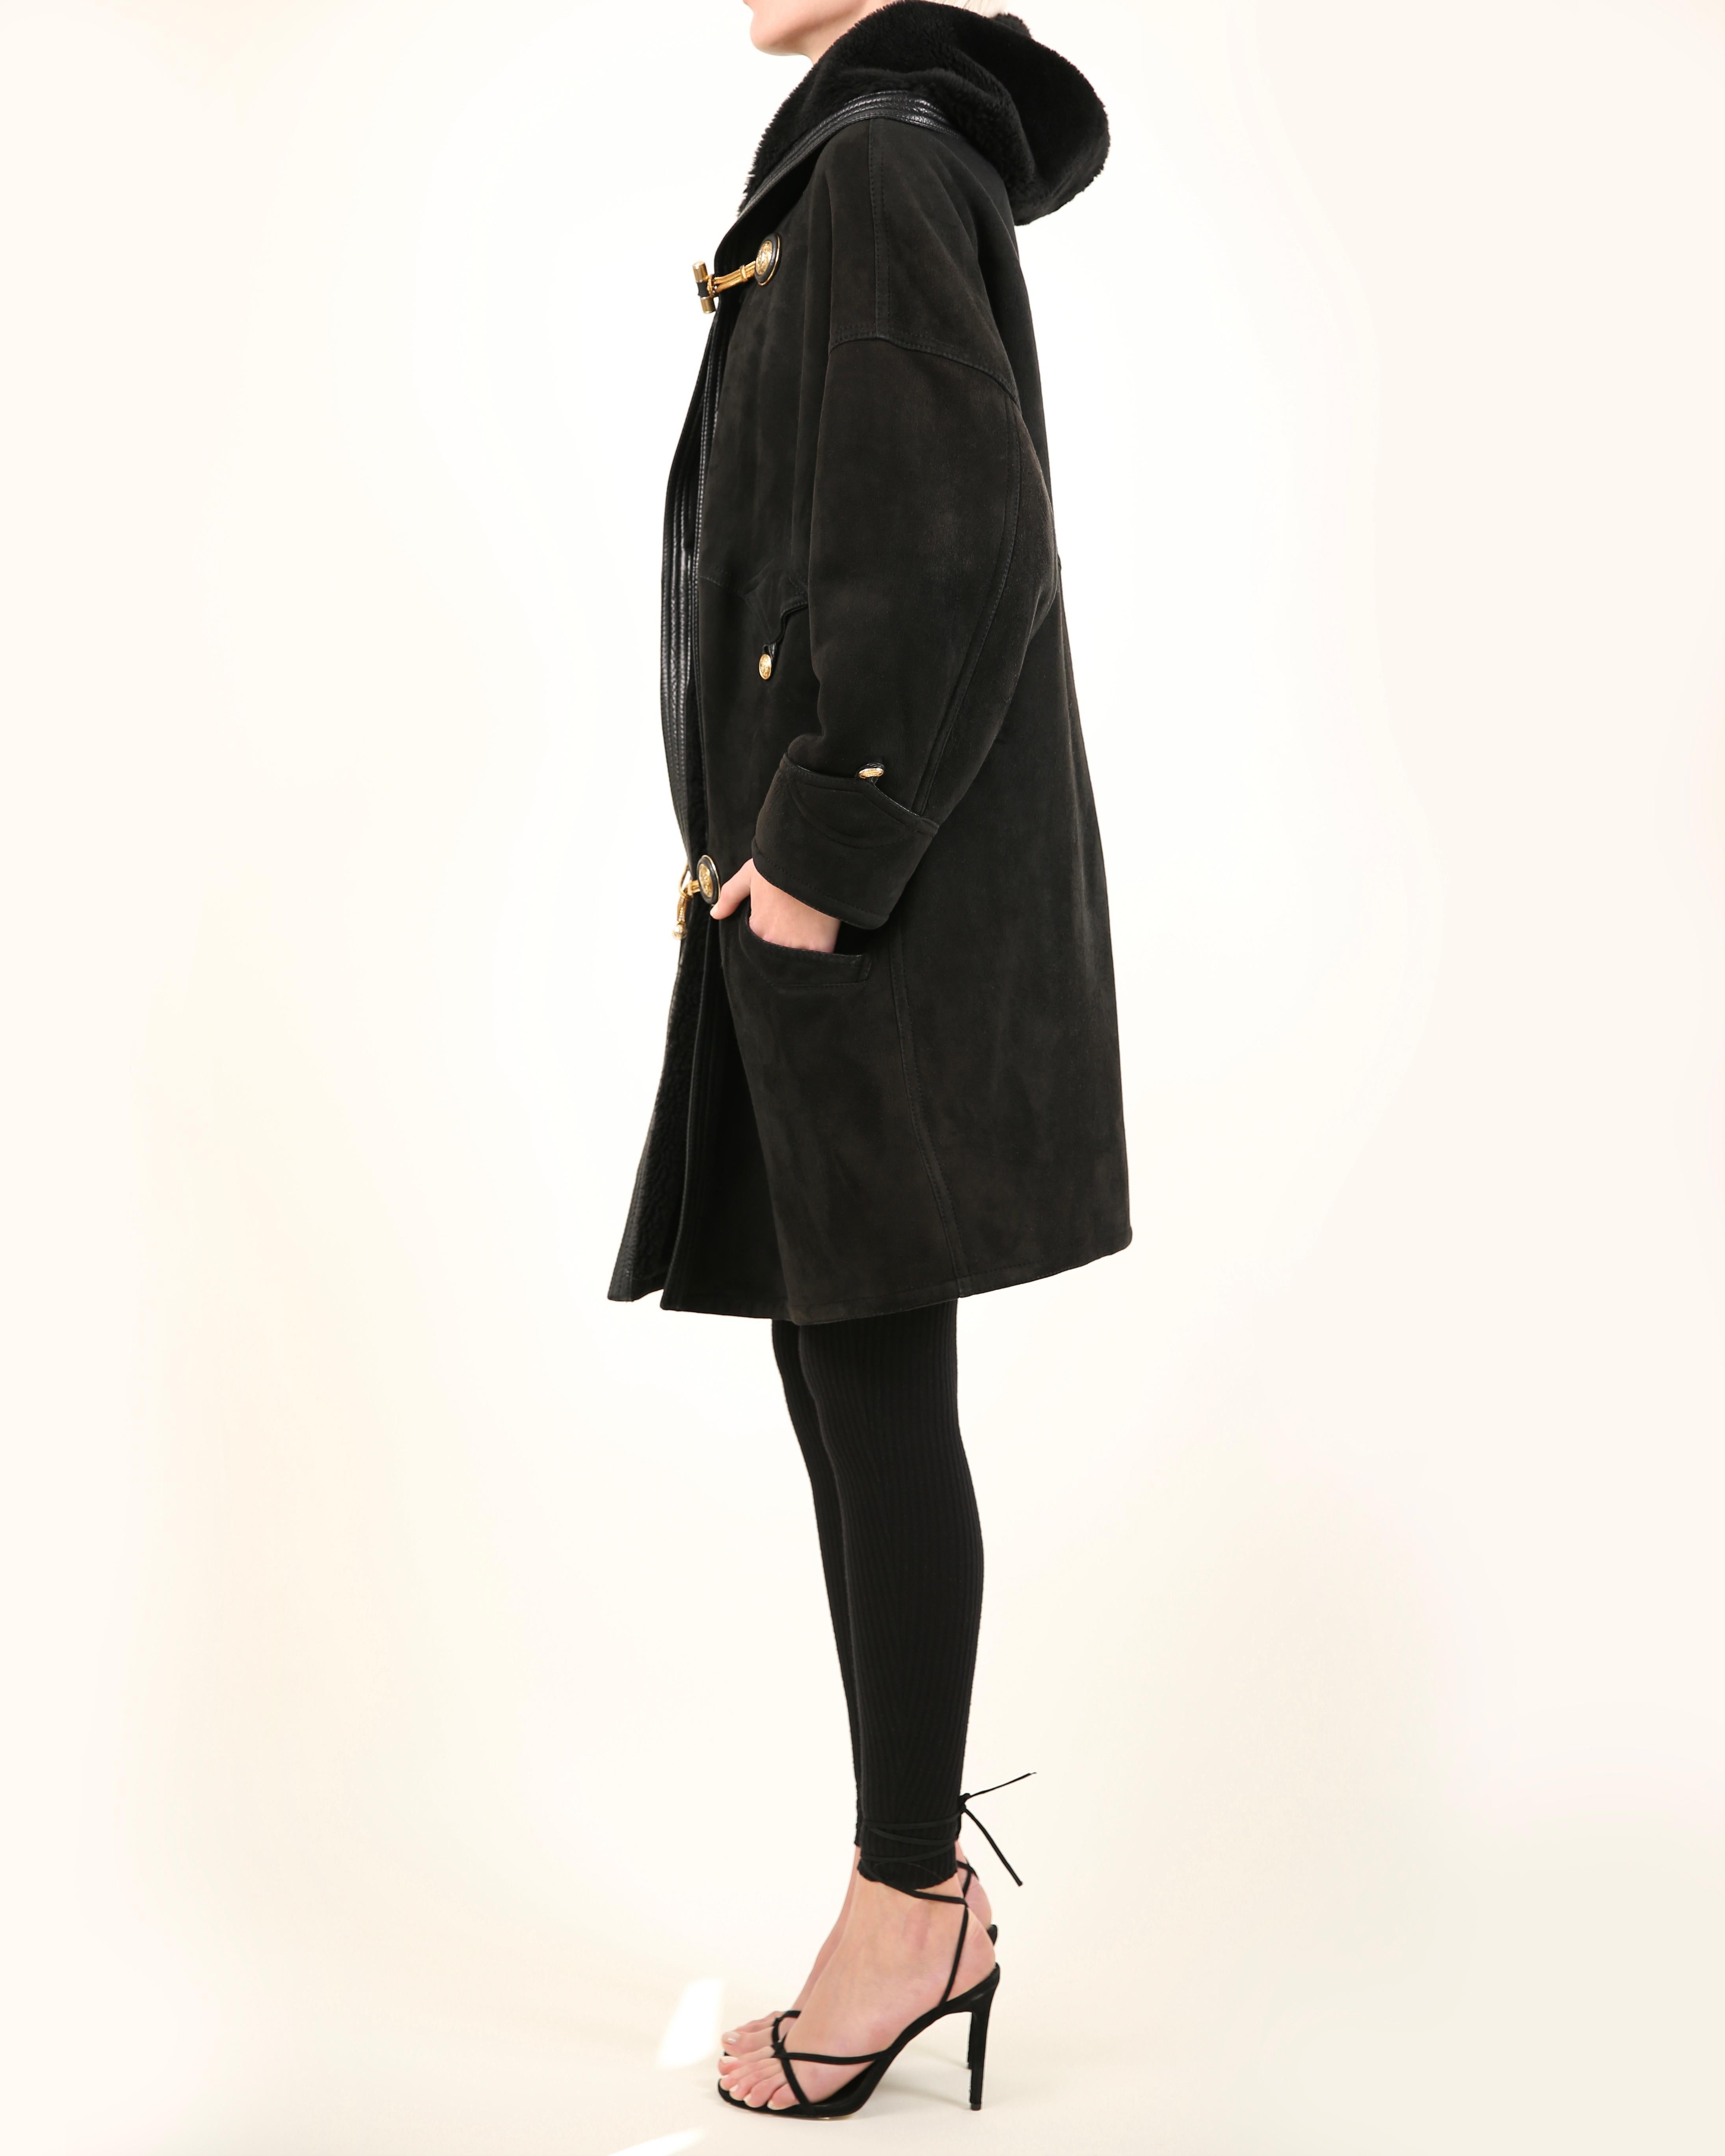 Gianni Versace 90's XS - L black leather suede shearling bondage coat jacket For Sale 8